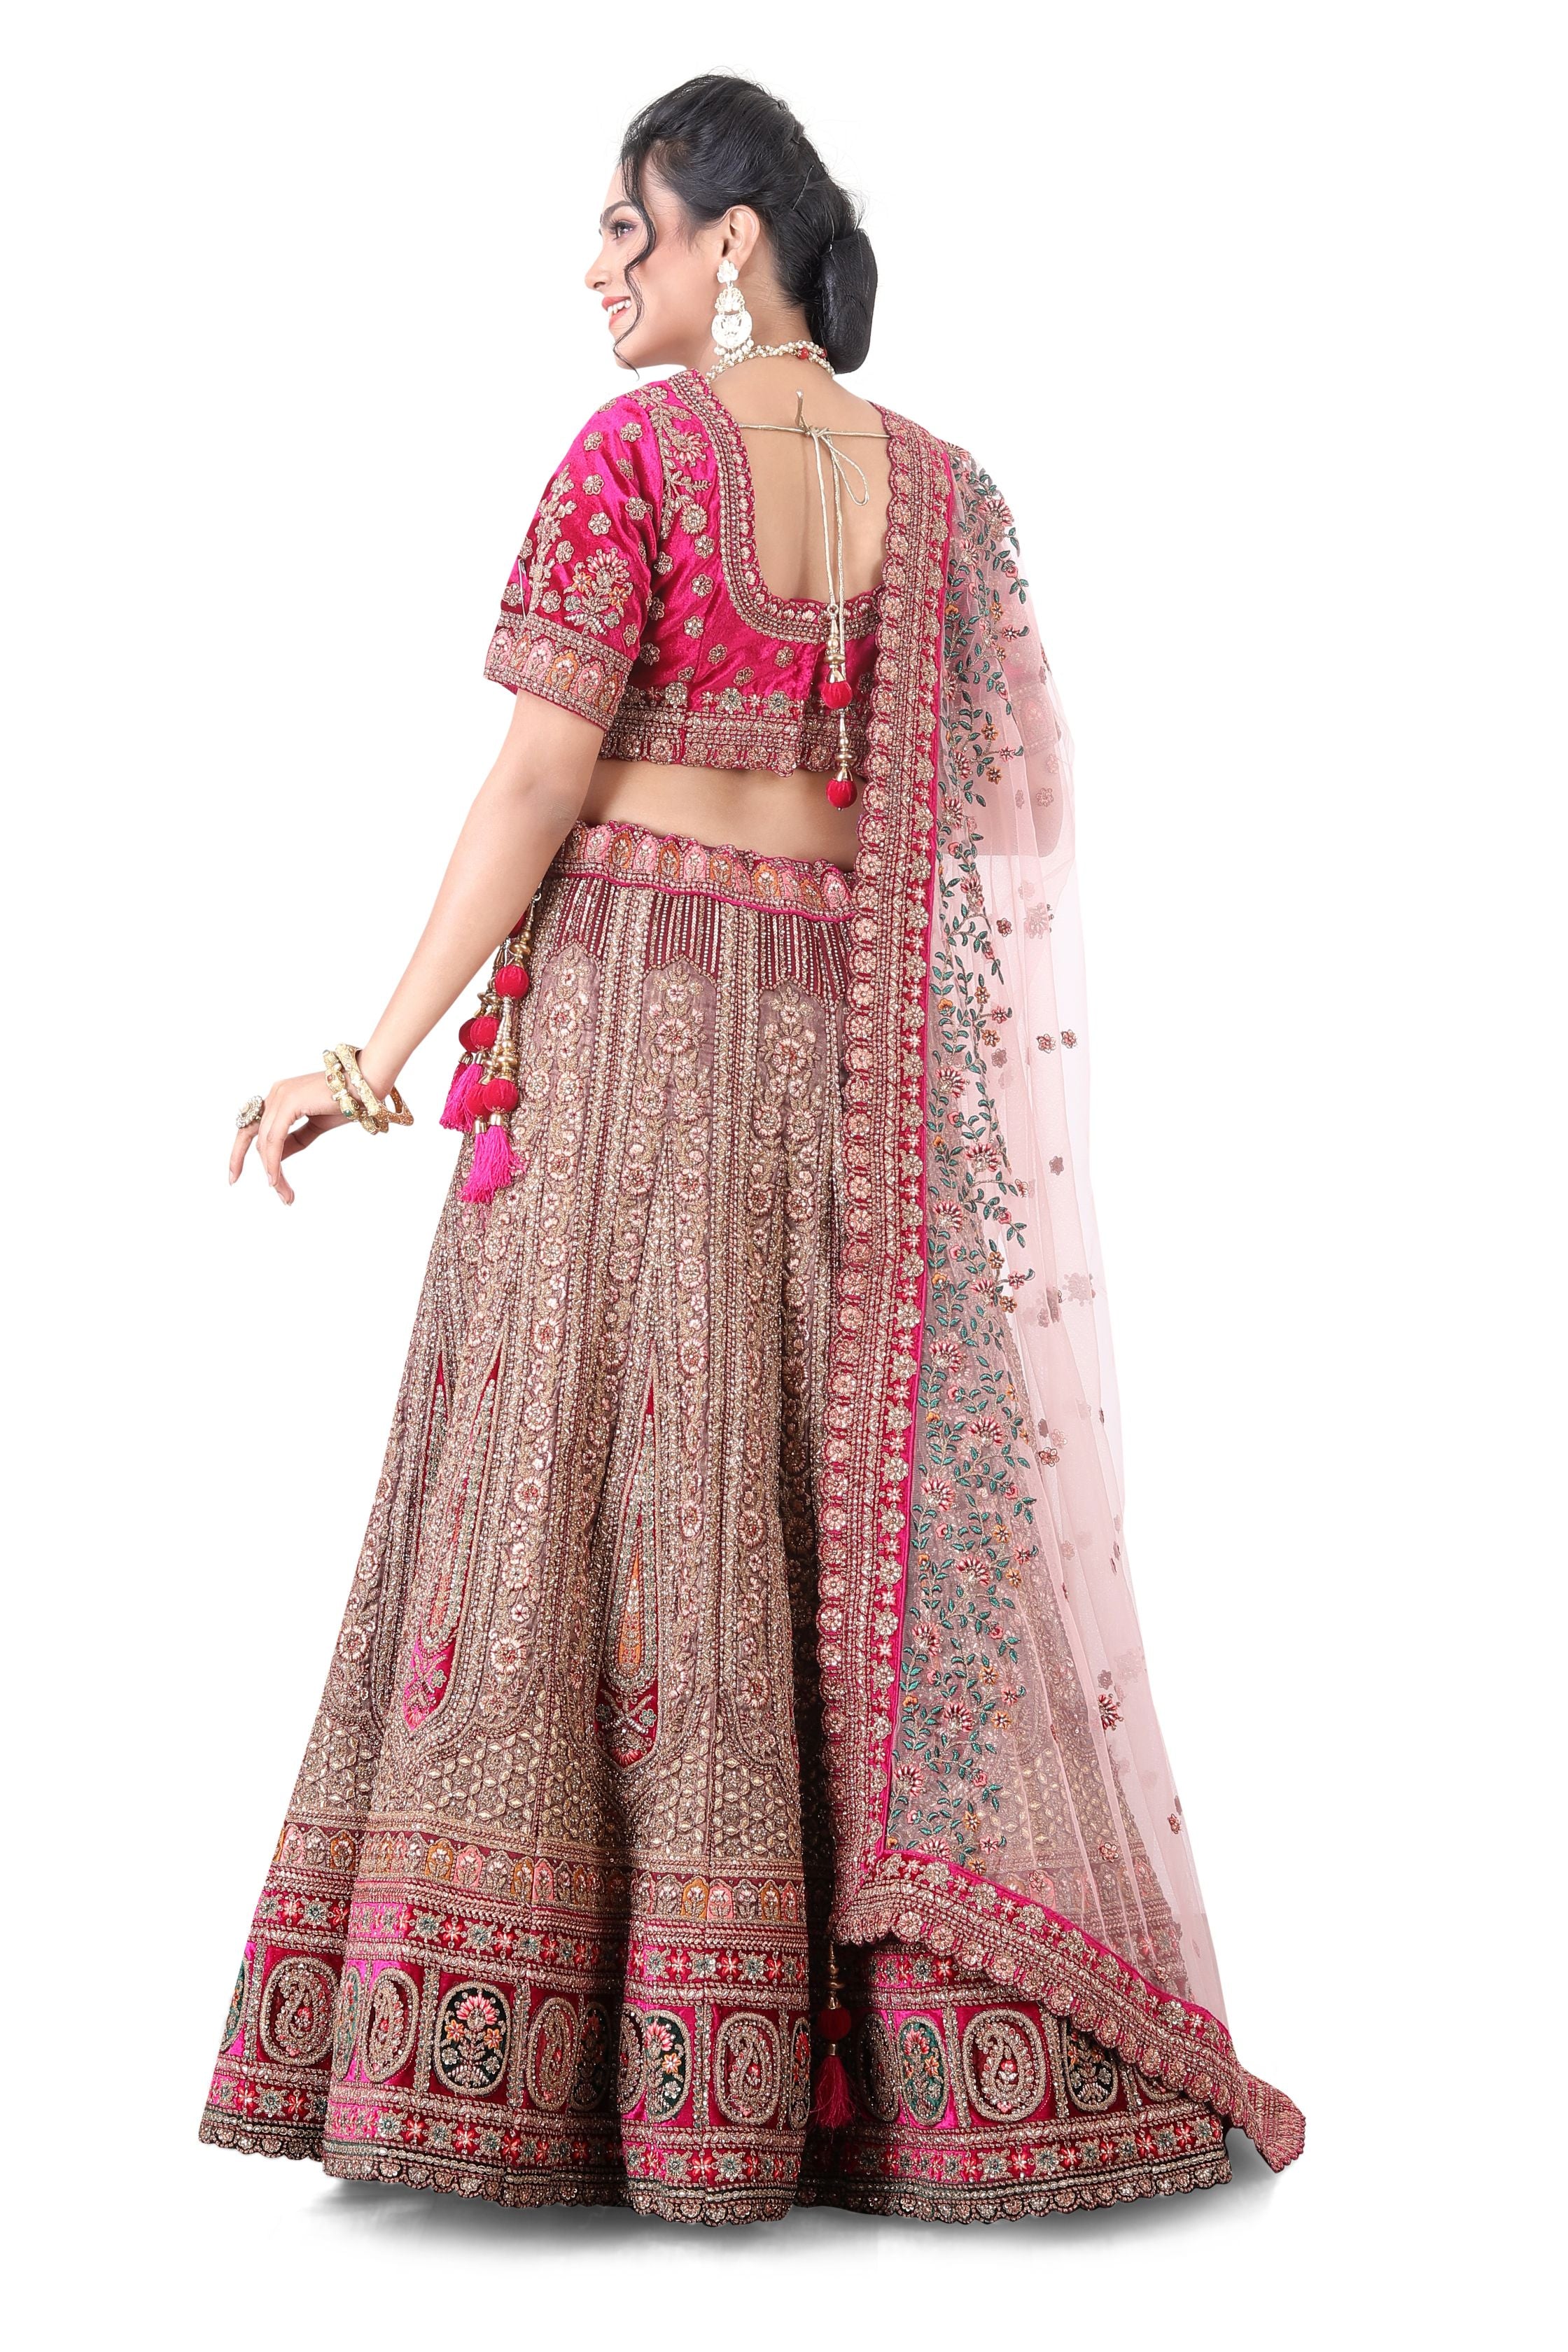 Gold-Pink Bridal Lehenga Choli - Premium Bridal lehenga from Dulhan Exclusives - Just $2950! Shop now at Dulhan Exclusives